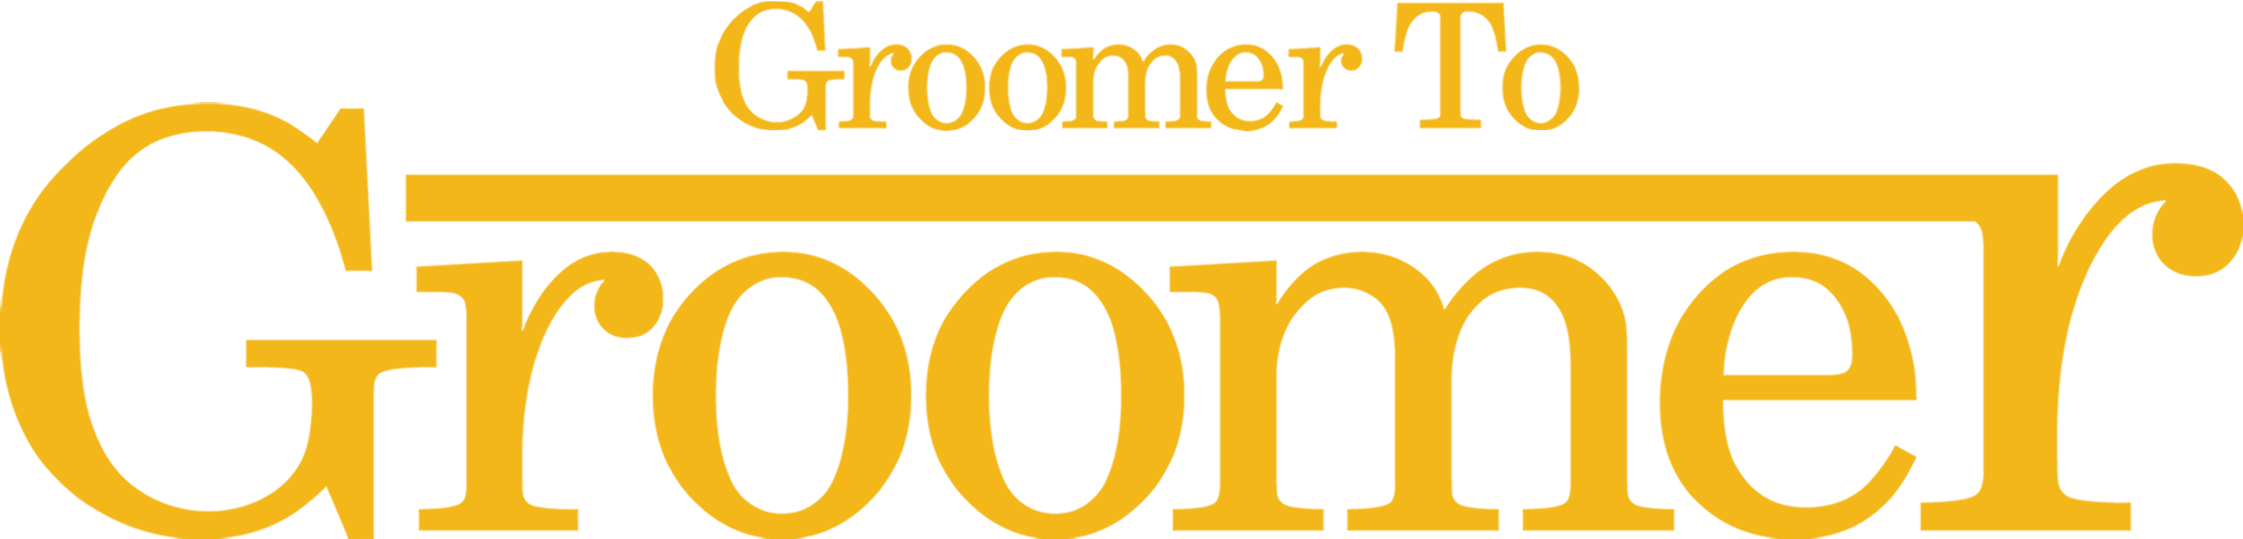 Groomer to Groomer logo yellow